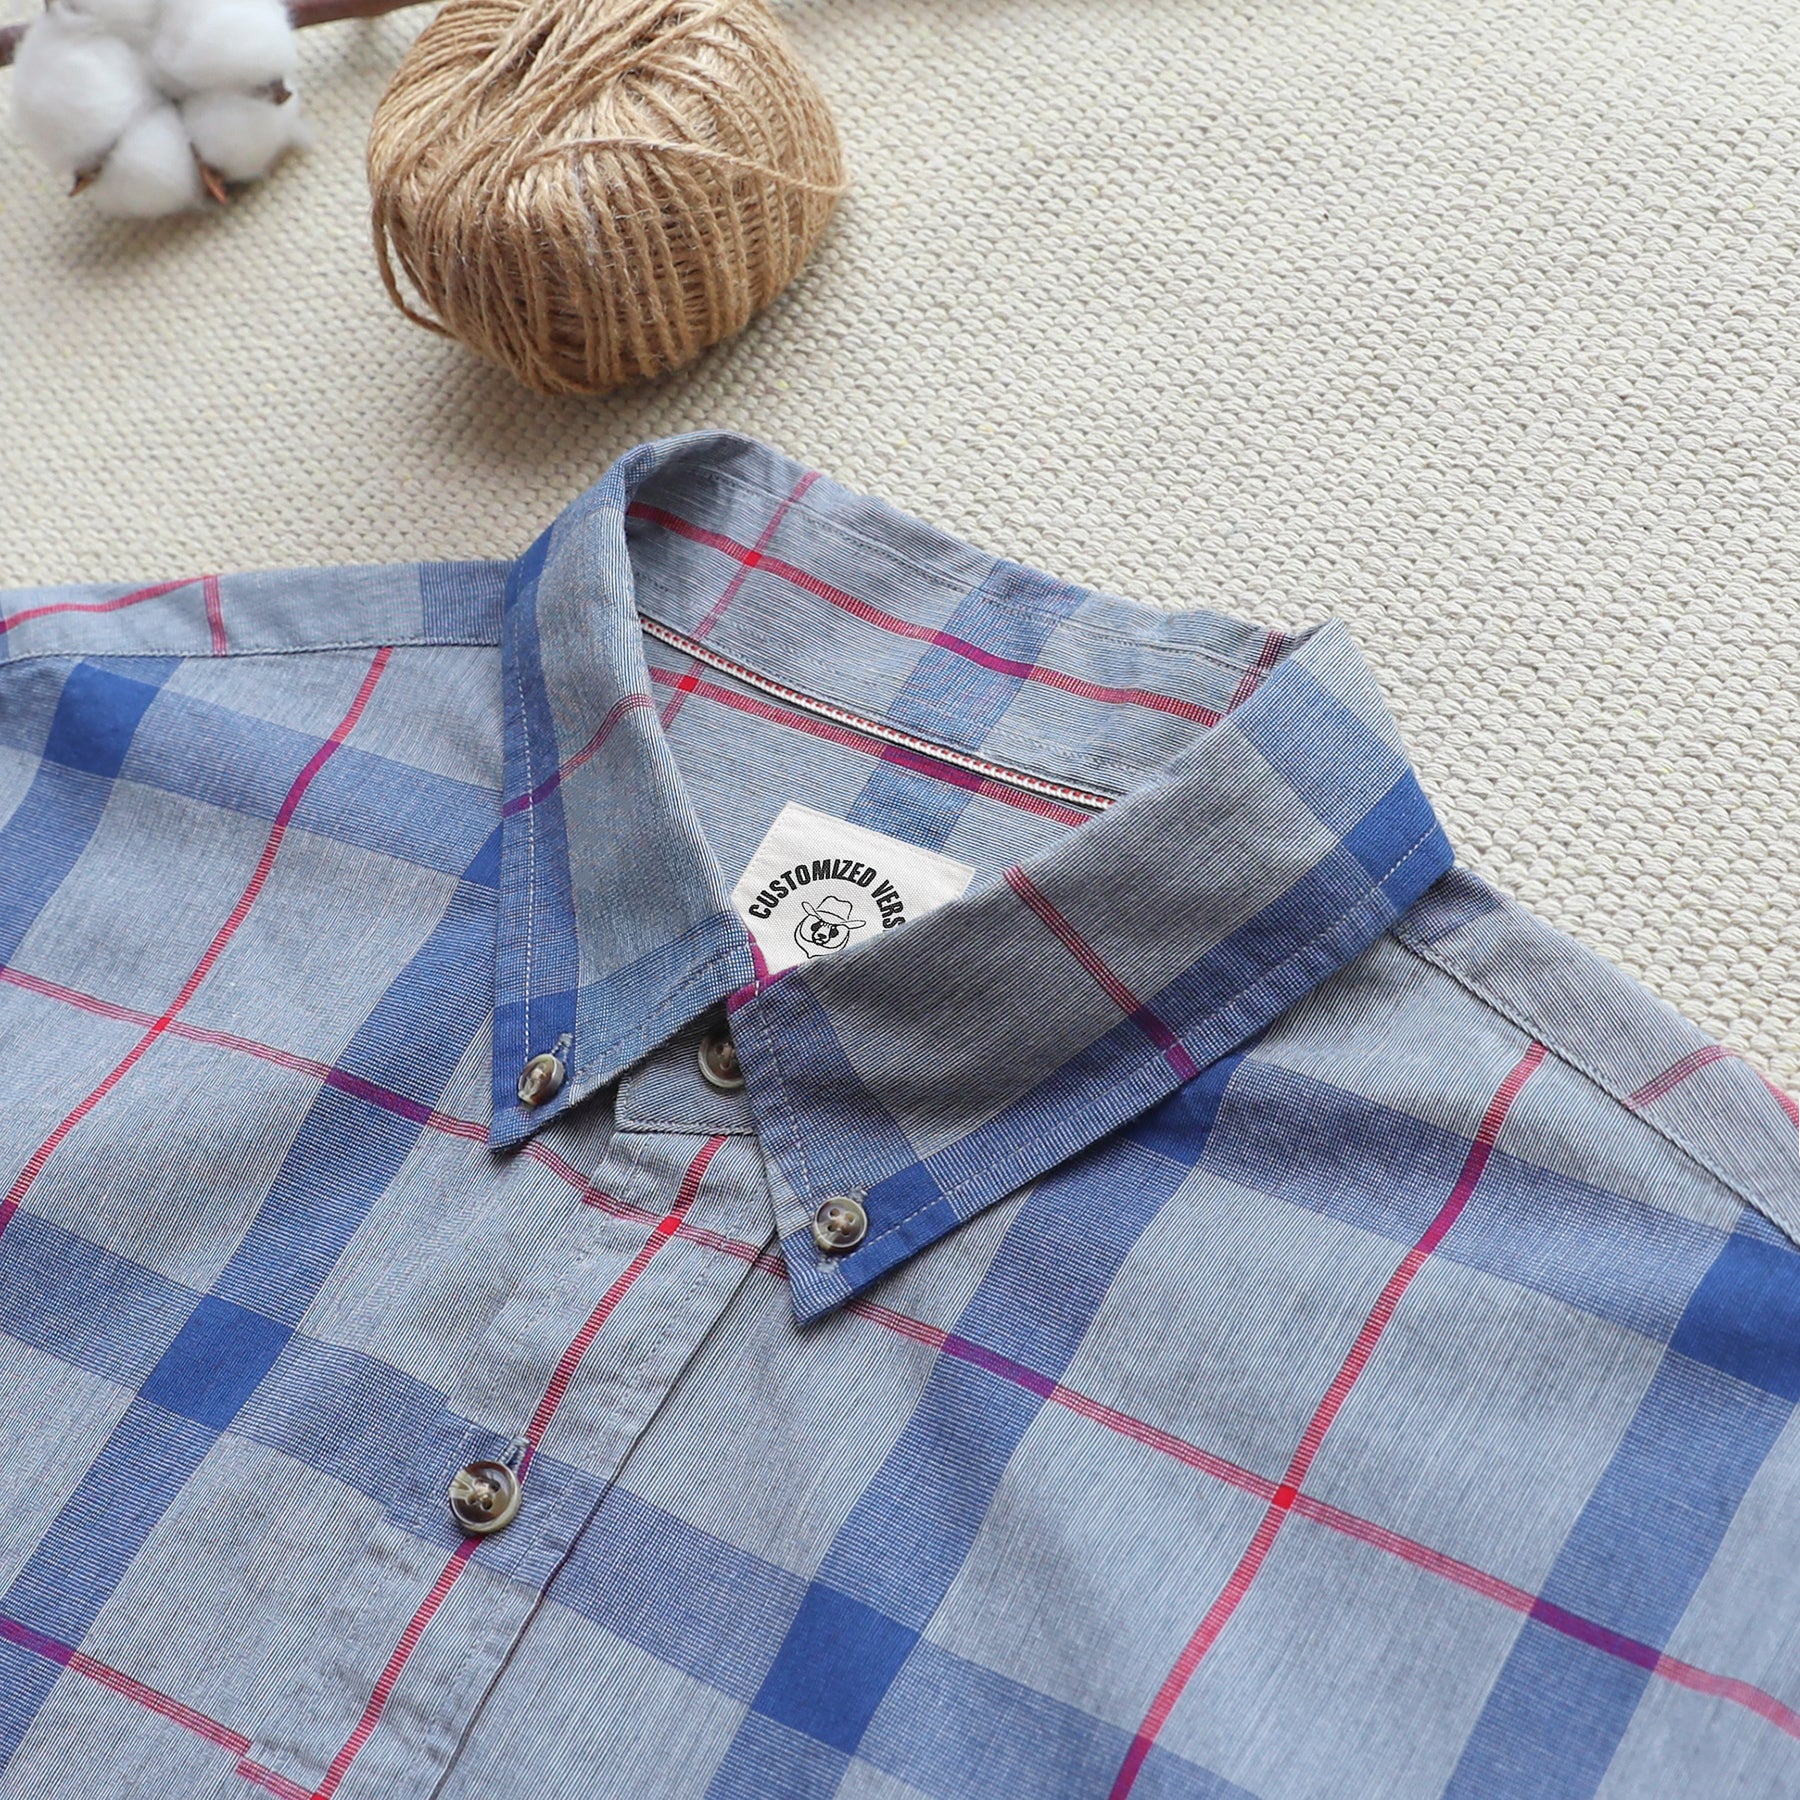 Men's casual short-sleeved cotton shirt #0004